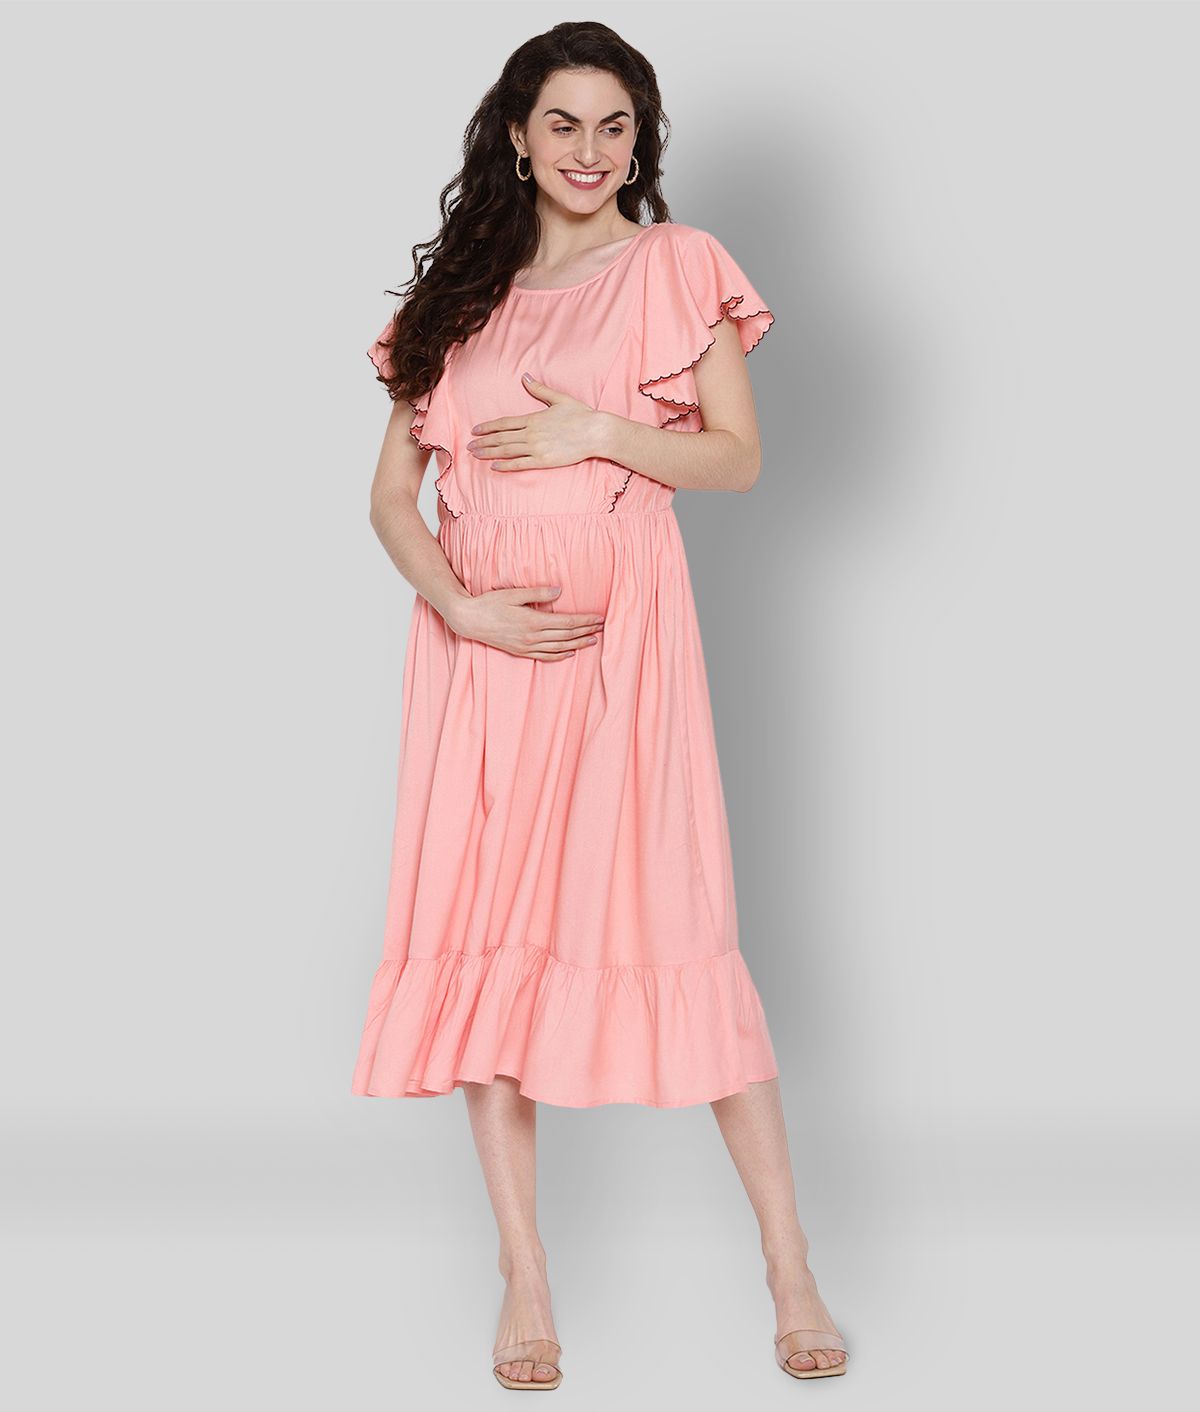 The Vanca Orange Rayon Maternity Dresses Single